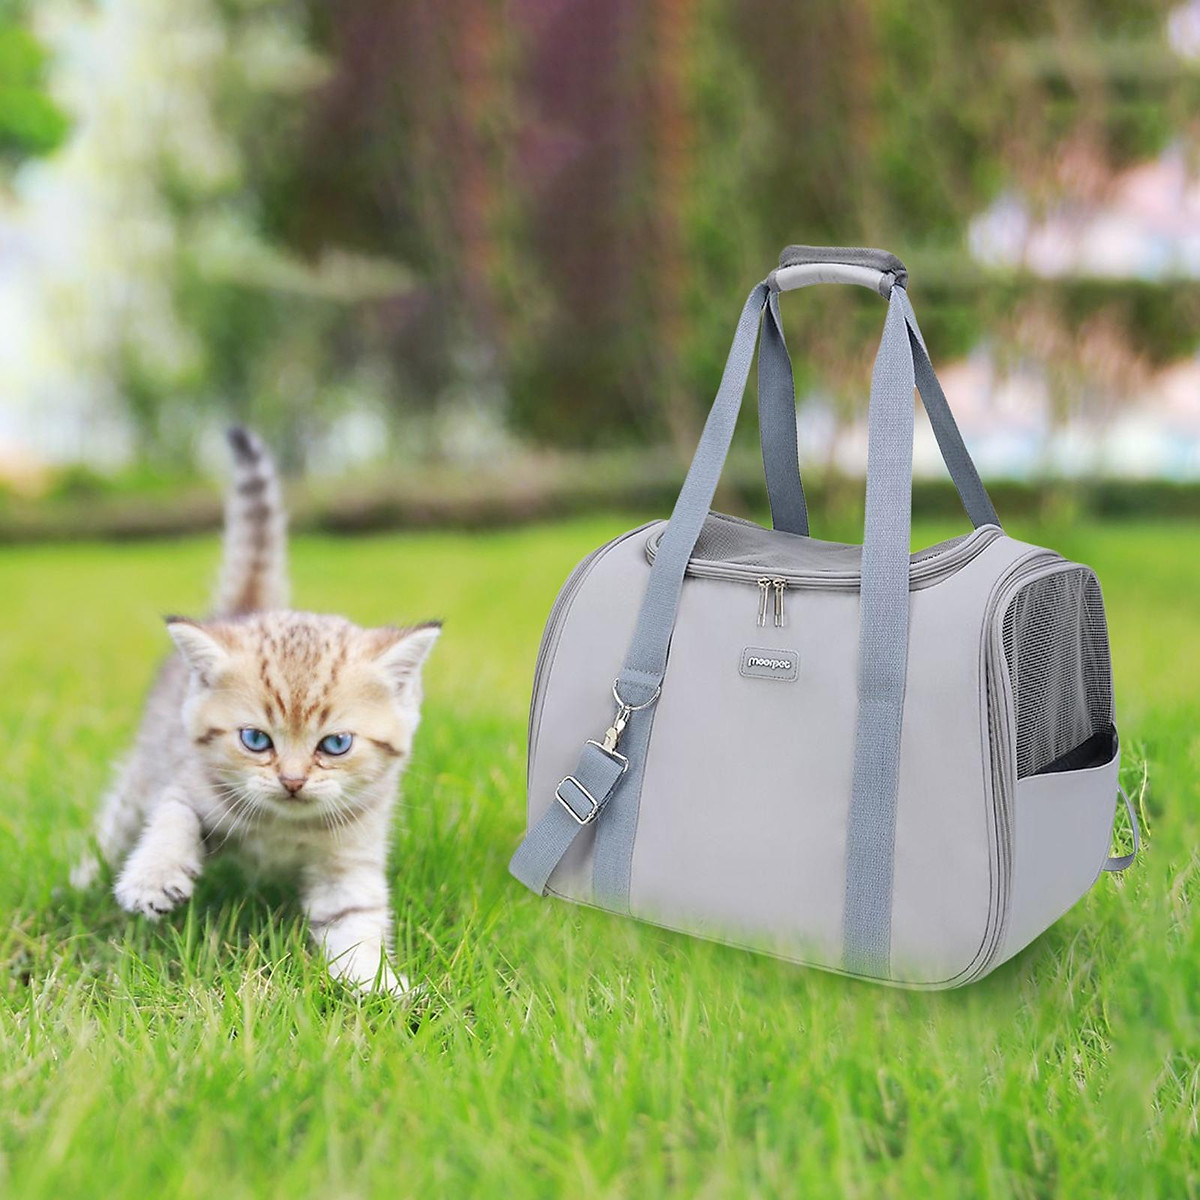 Cat Travel Bag Best Sale - www.illva.com 1693606547